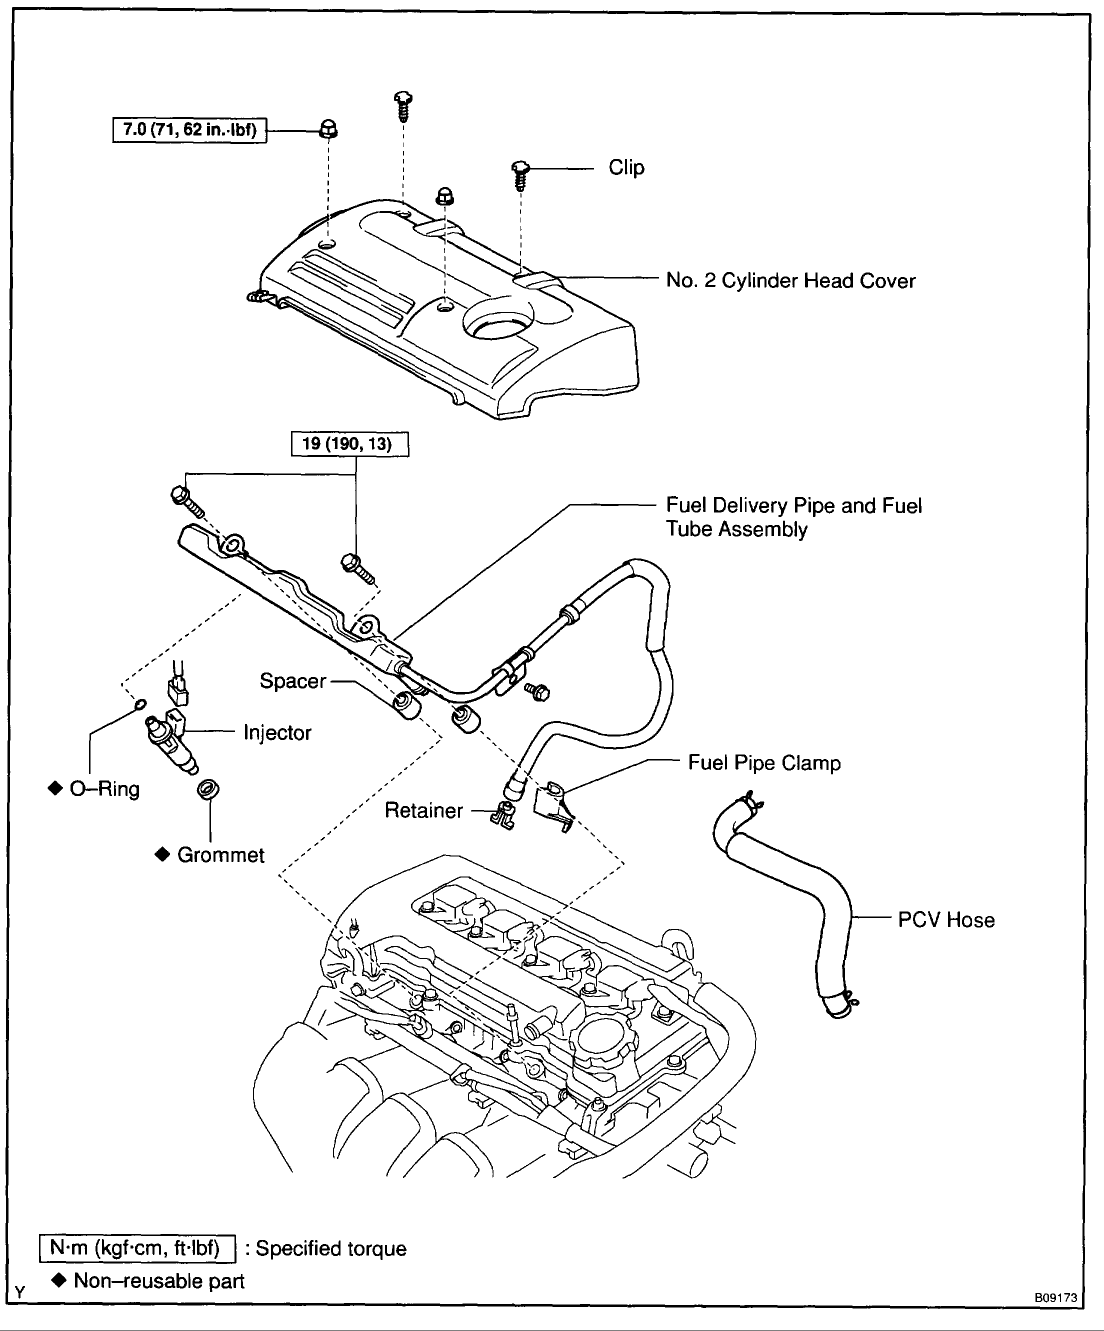 Wiring Diagram PDF: 2002 Toyota Celica Wiring Diagram